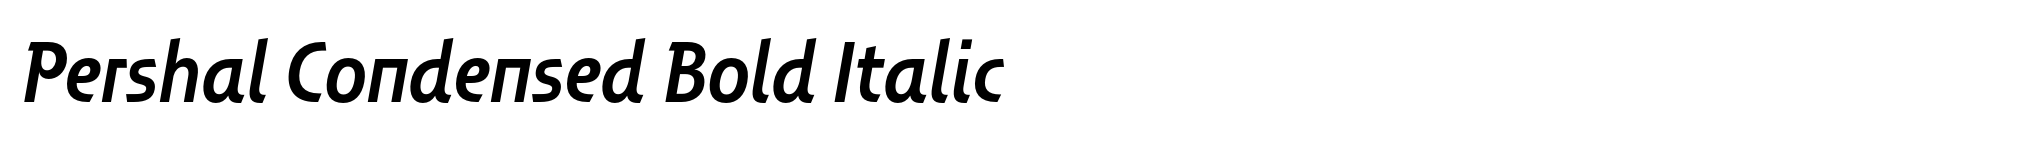 Pershal Condensed Bold Italic image